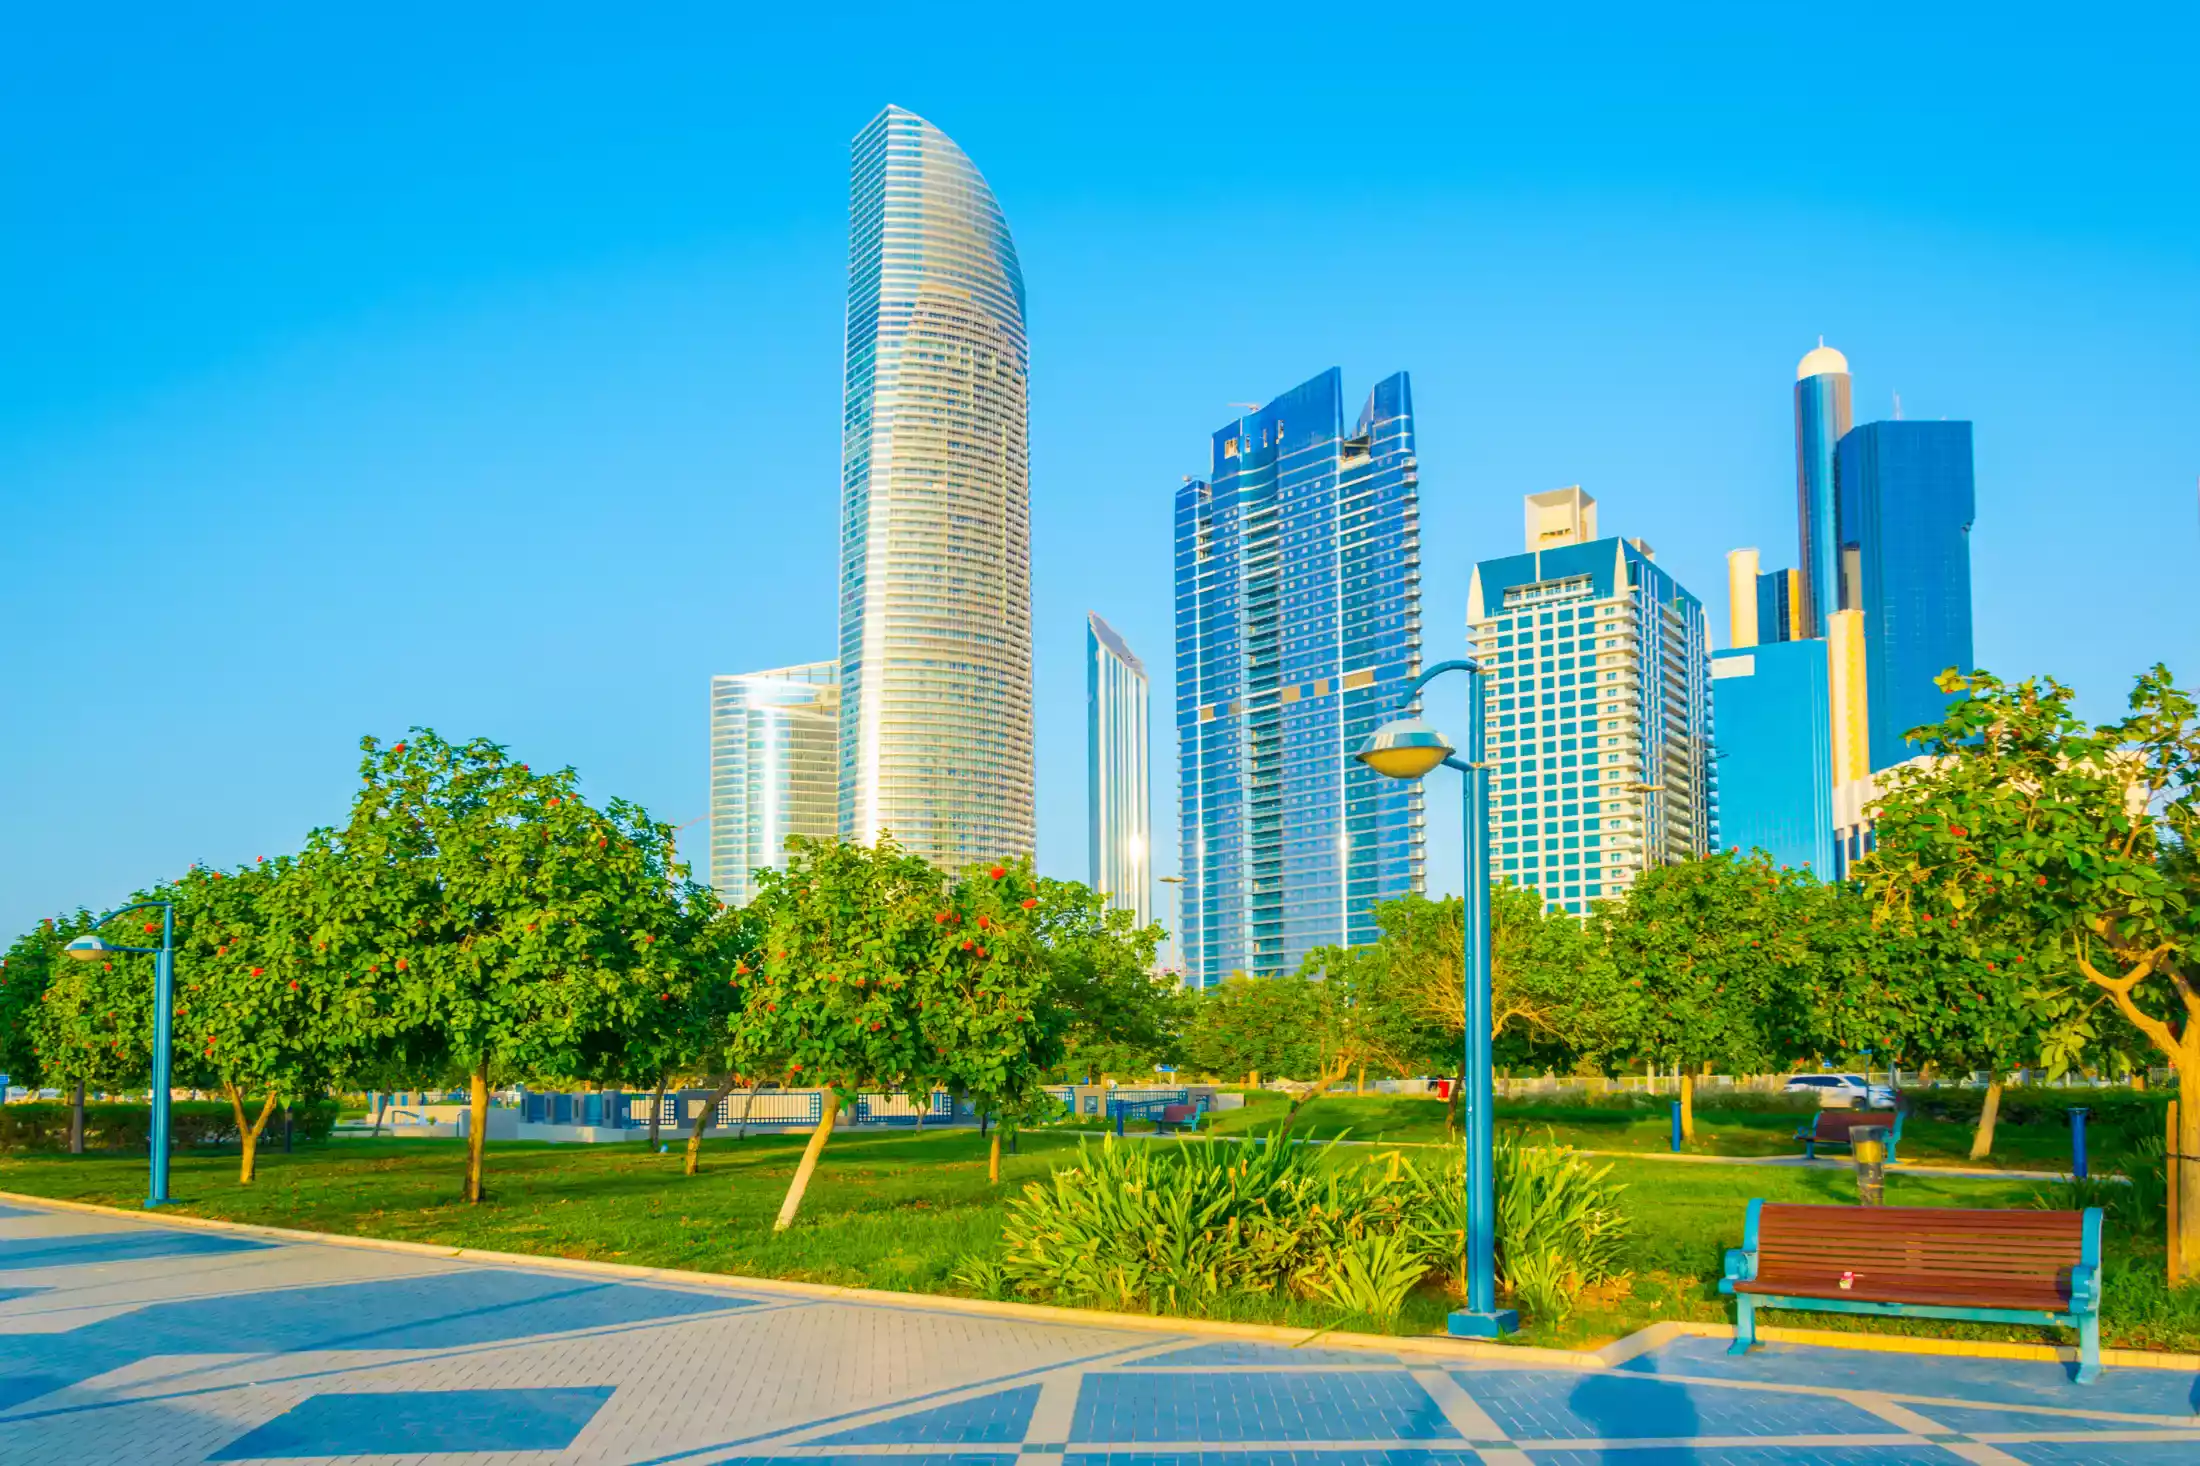 Trees and greenery along a path along the Corniche Abu Dhabi.